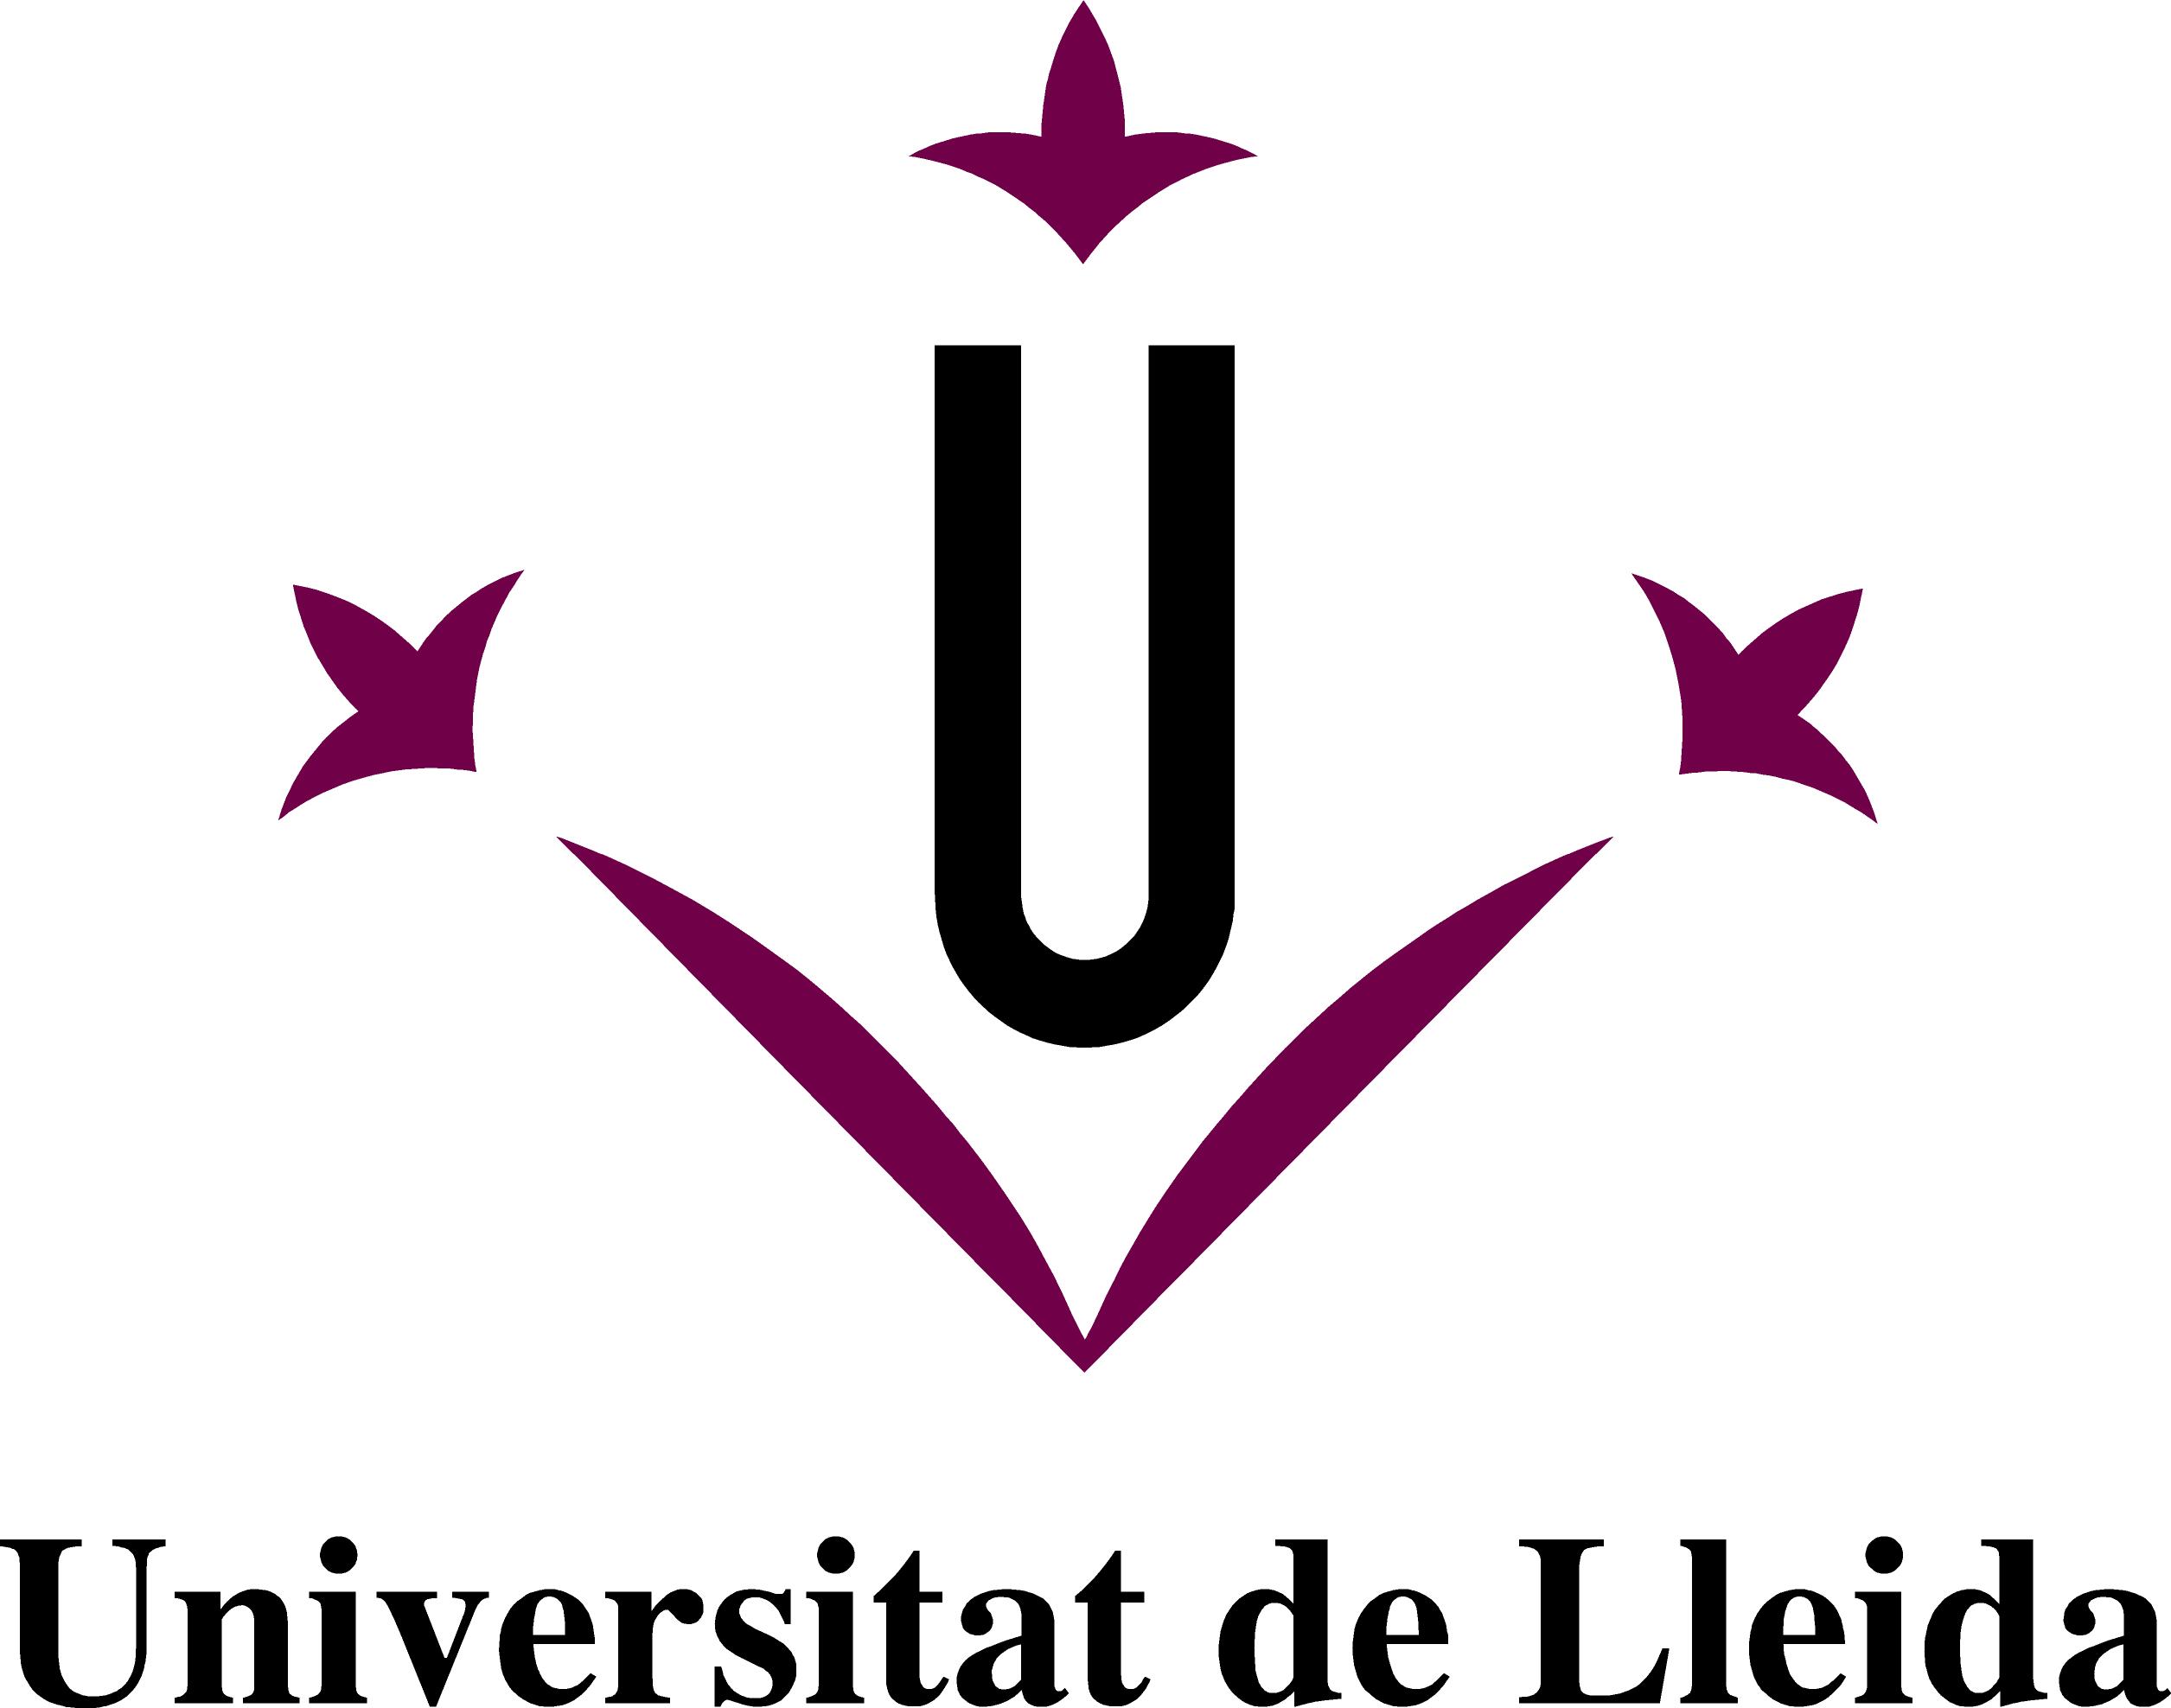 University of Lleida